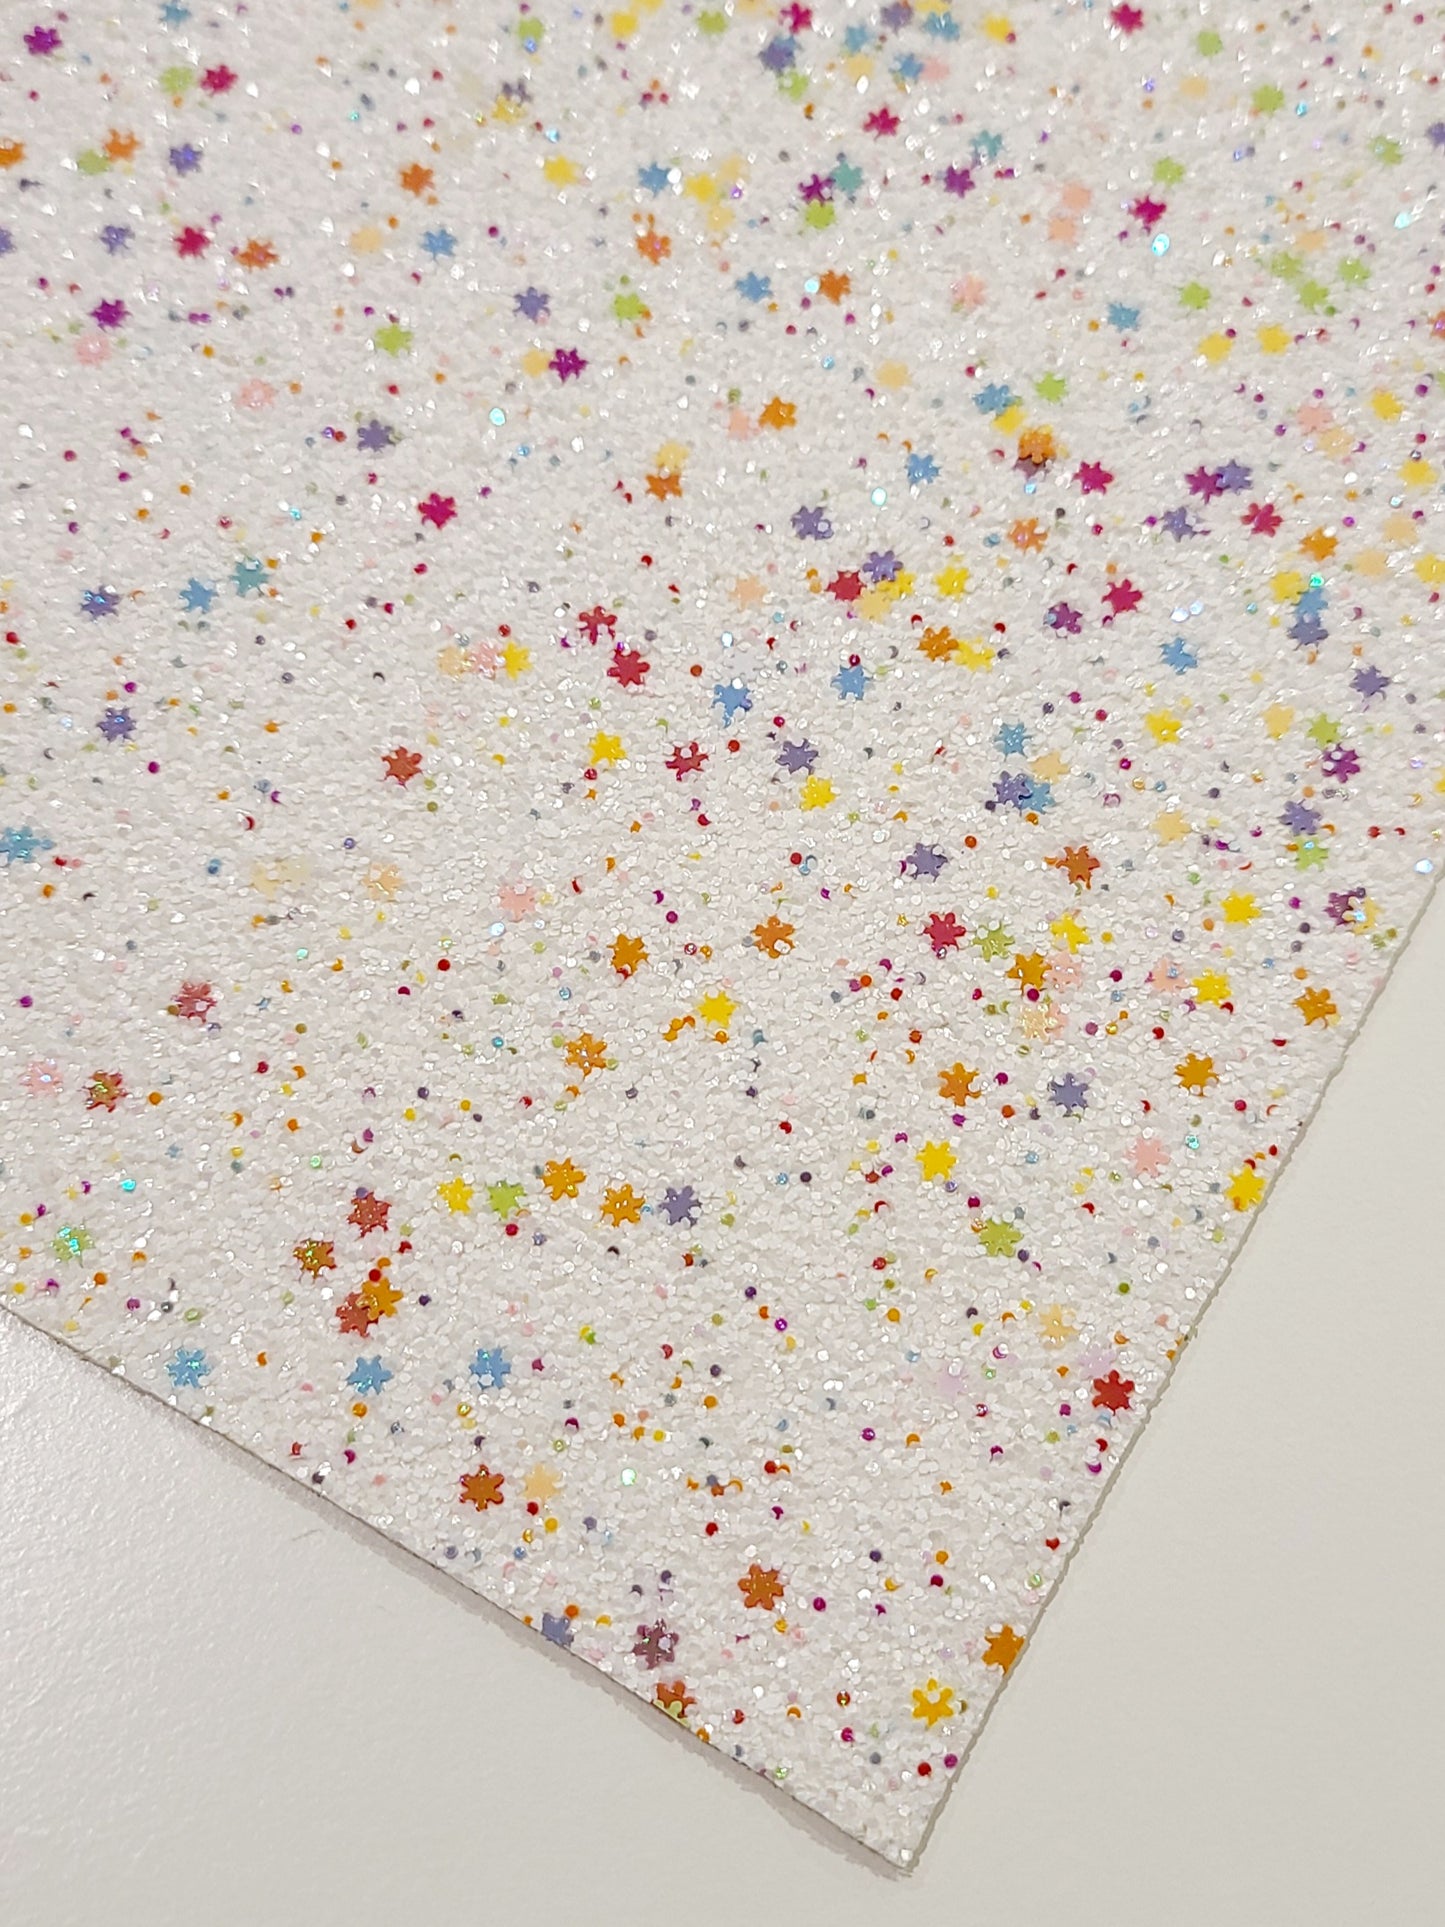 Snowflake Chunky Glitter Fabric Sheets